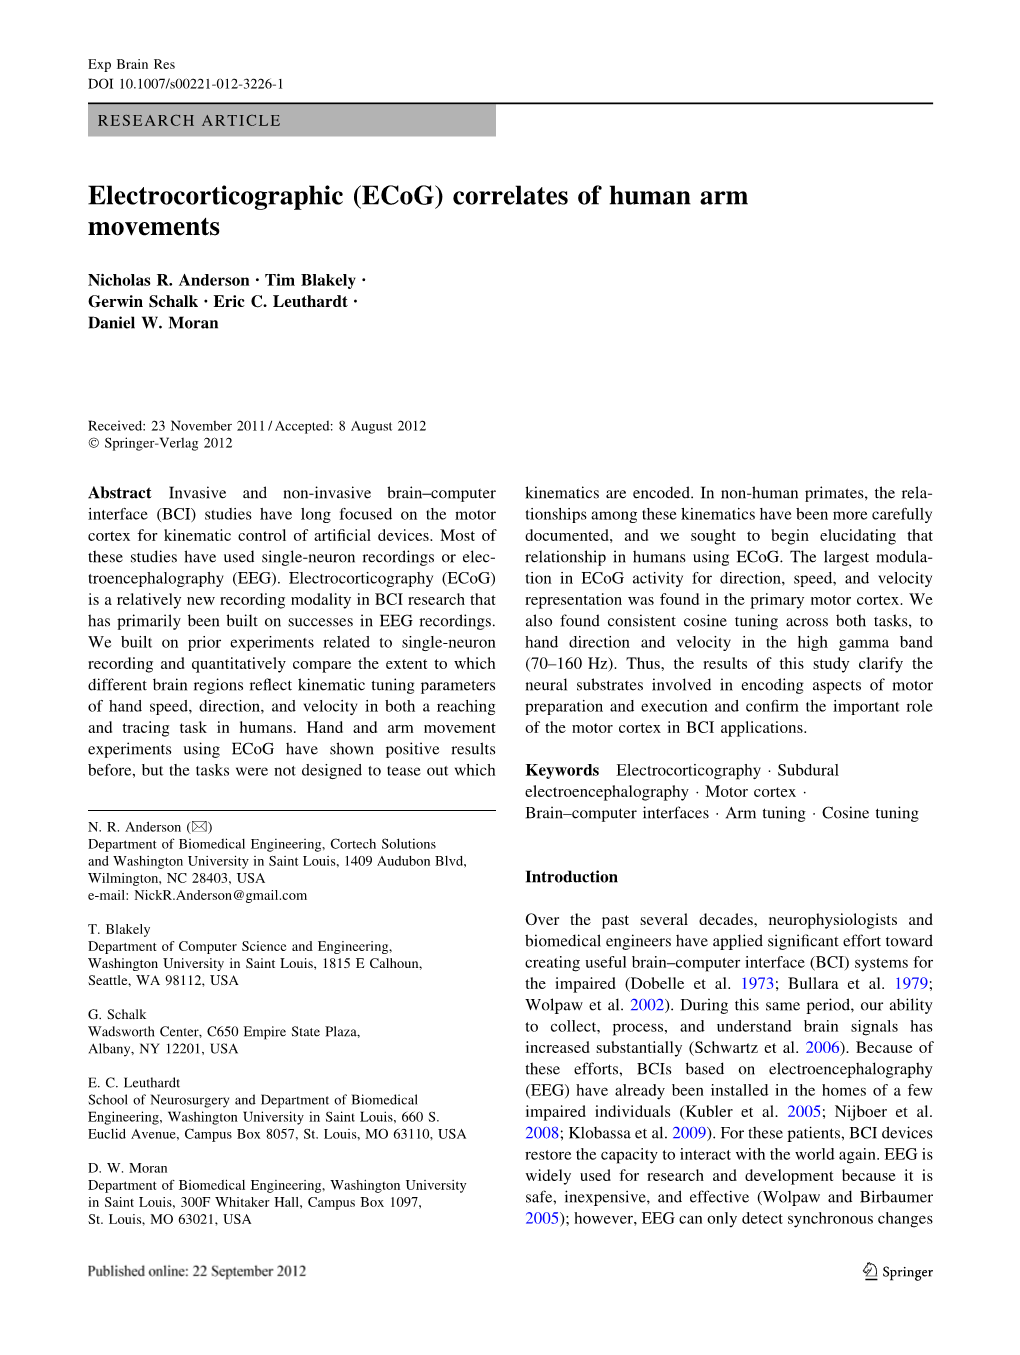 Electrocorticographic (Ecog) Correlates of Human Arm Movements